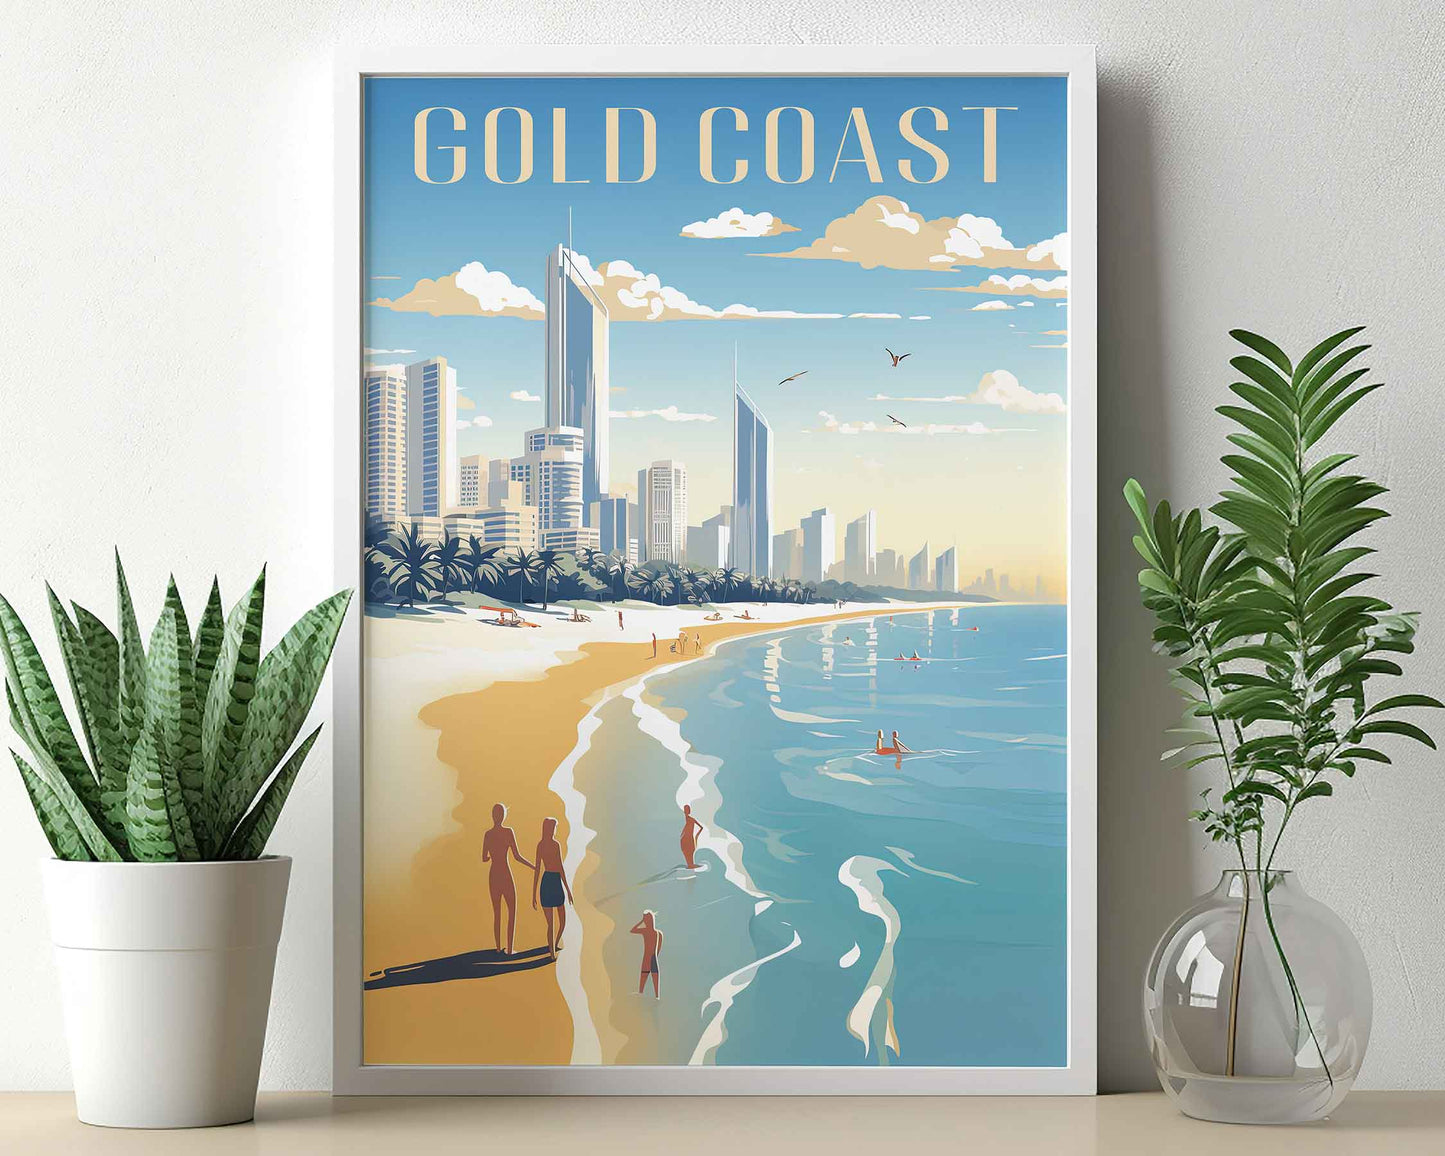 Framed Image of Gold Coast Australia Travel Poster Wall Art Prints Illustration